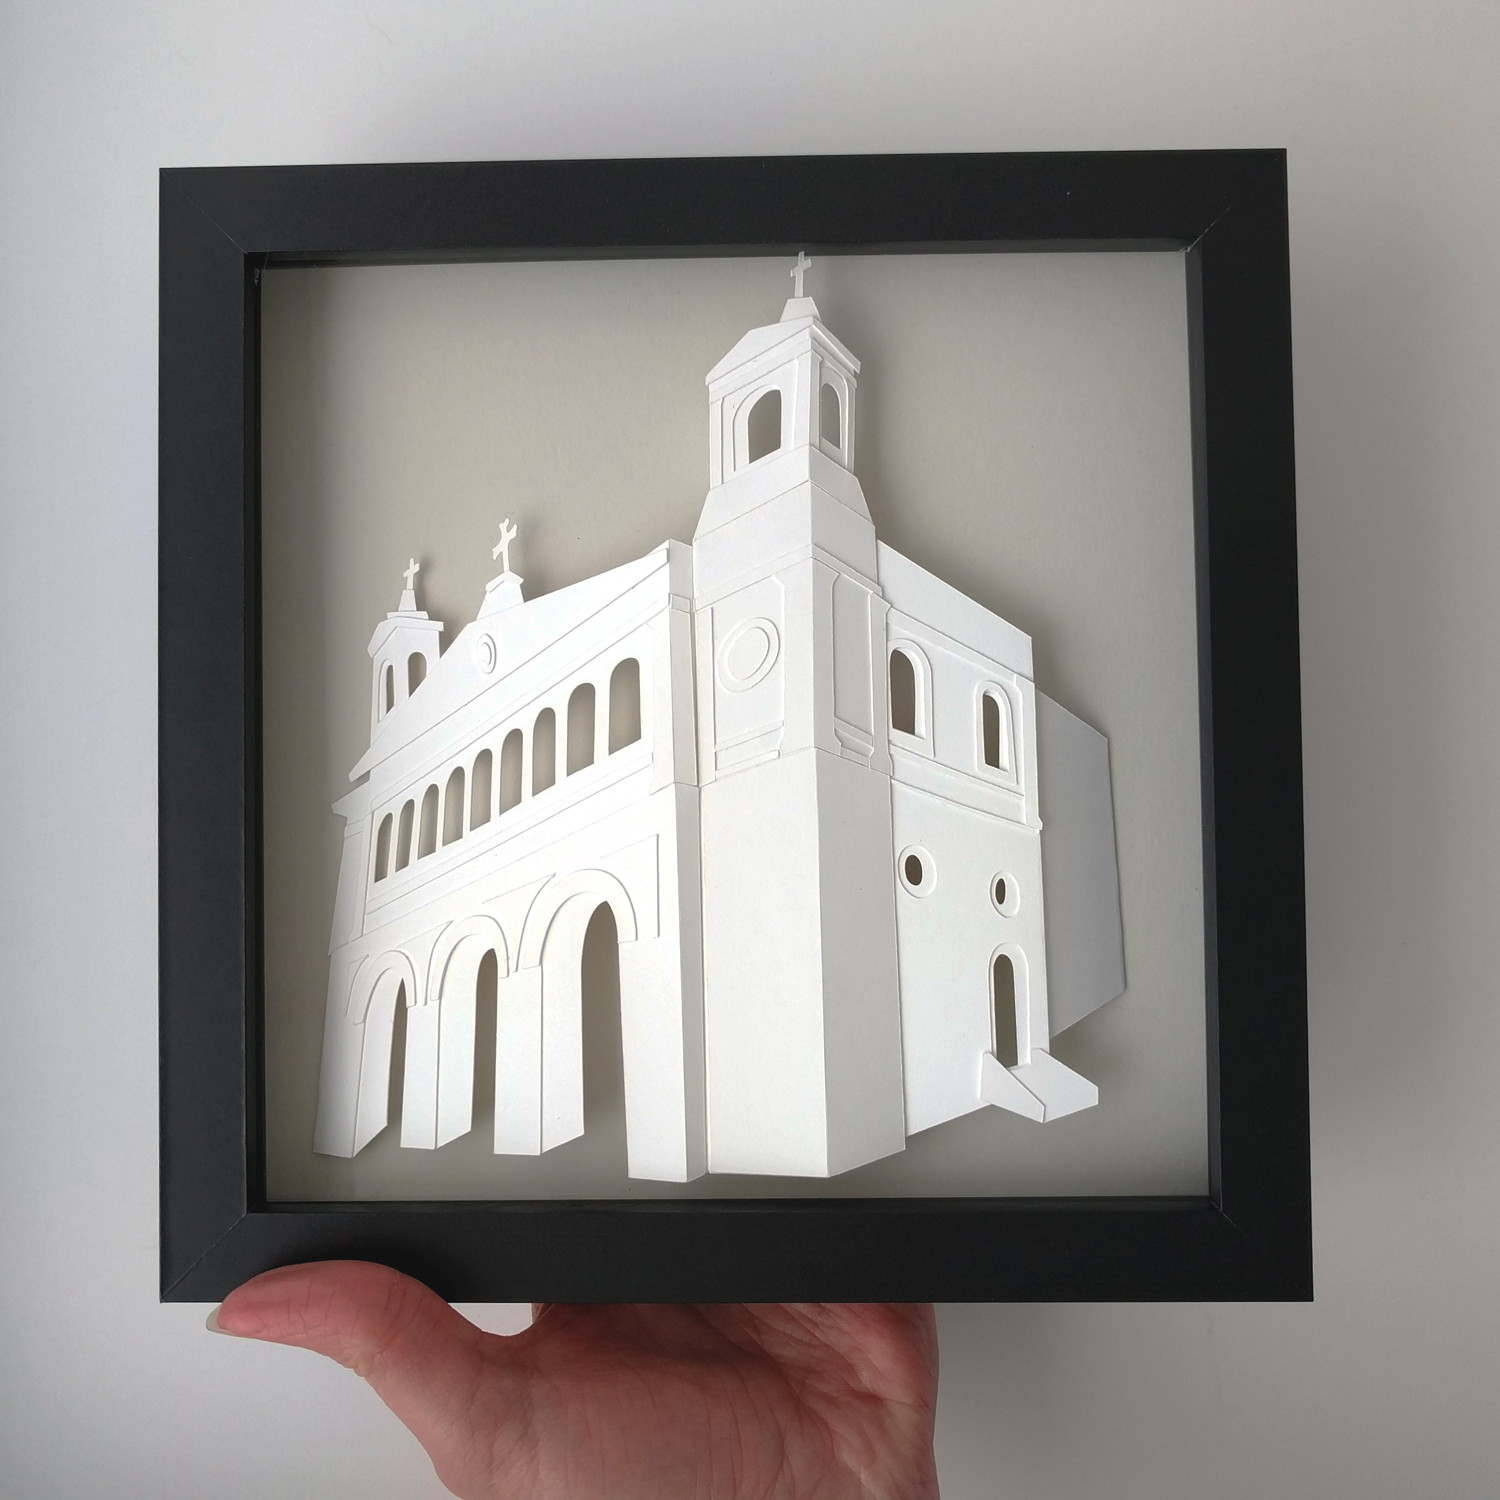 a hand holding a paper cut of a church